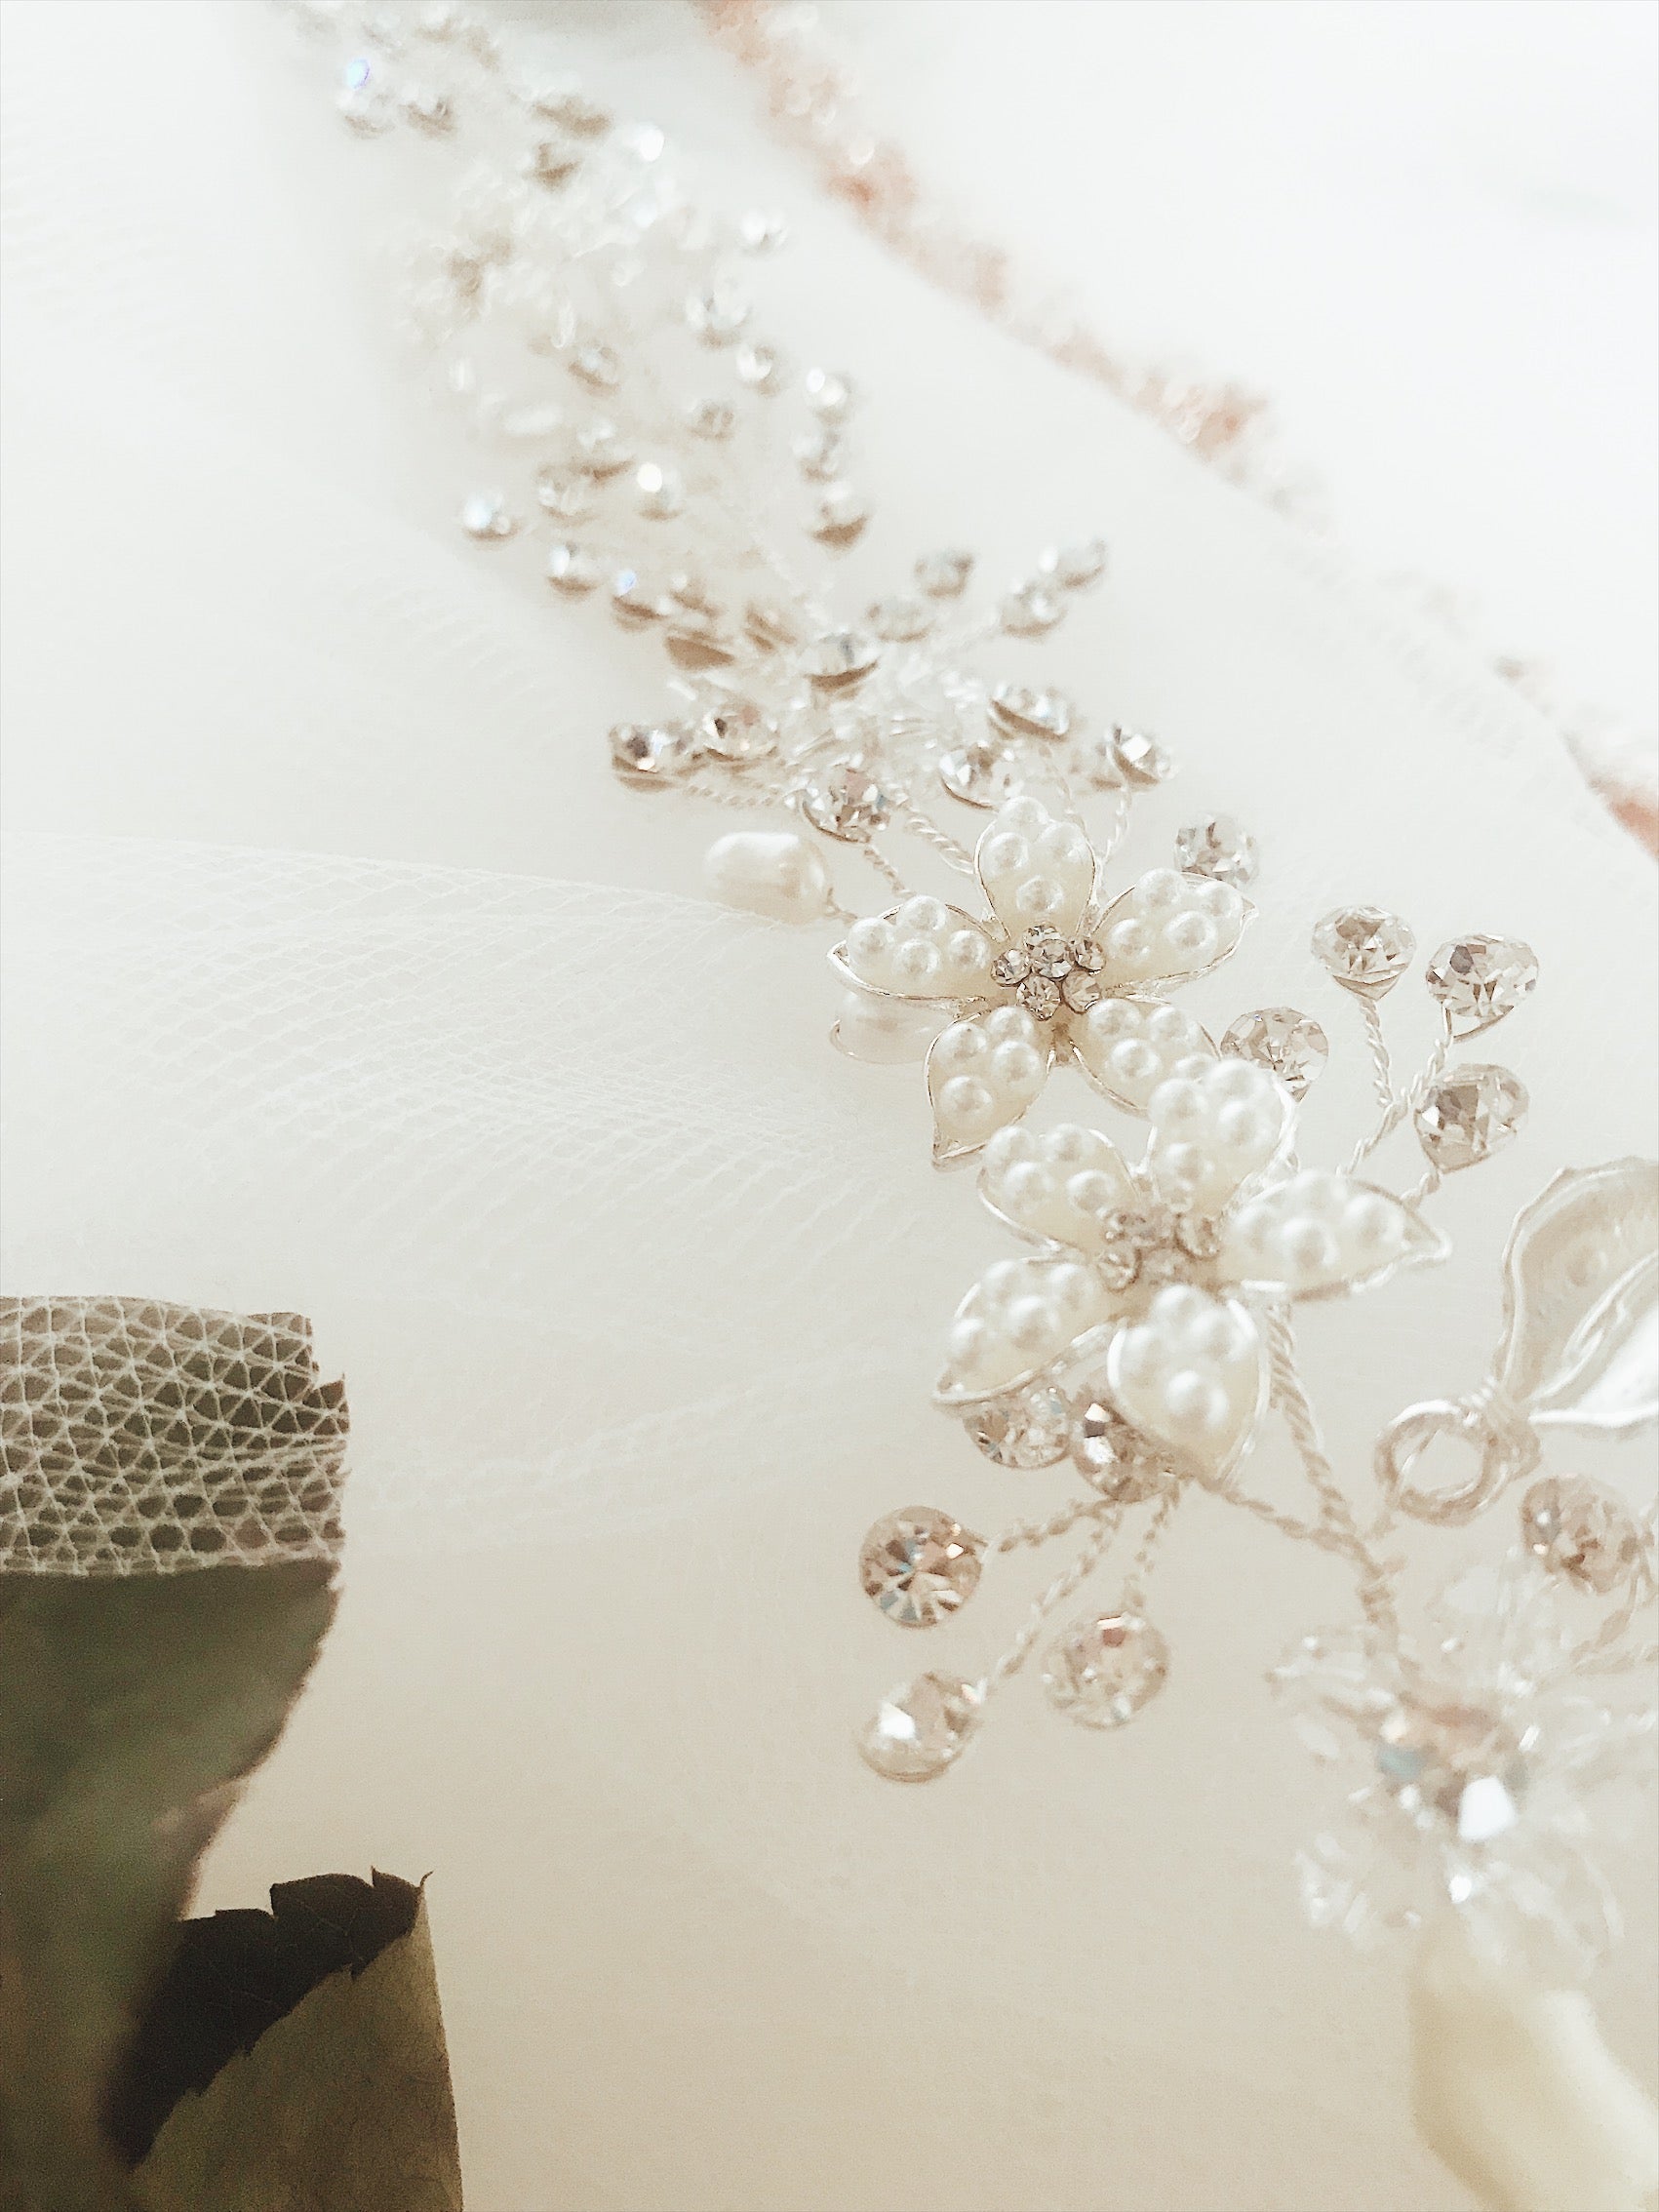 Details of the Lauren Elaine "Verbena" crystal and pearl bridal hair vine and bridal flower crown